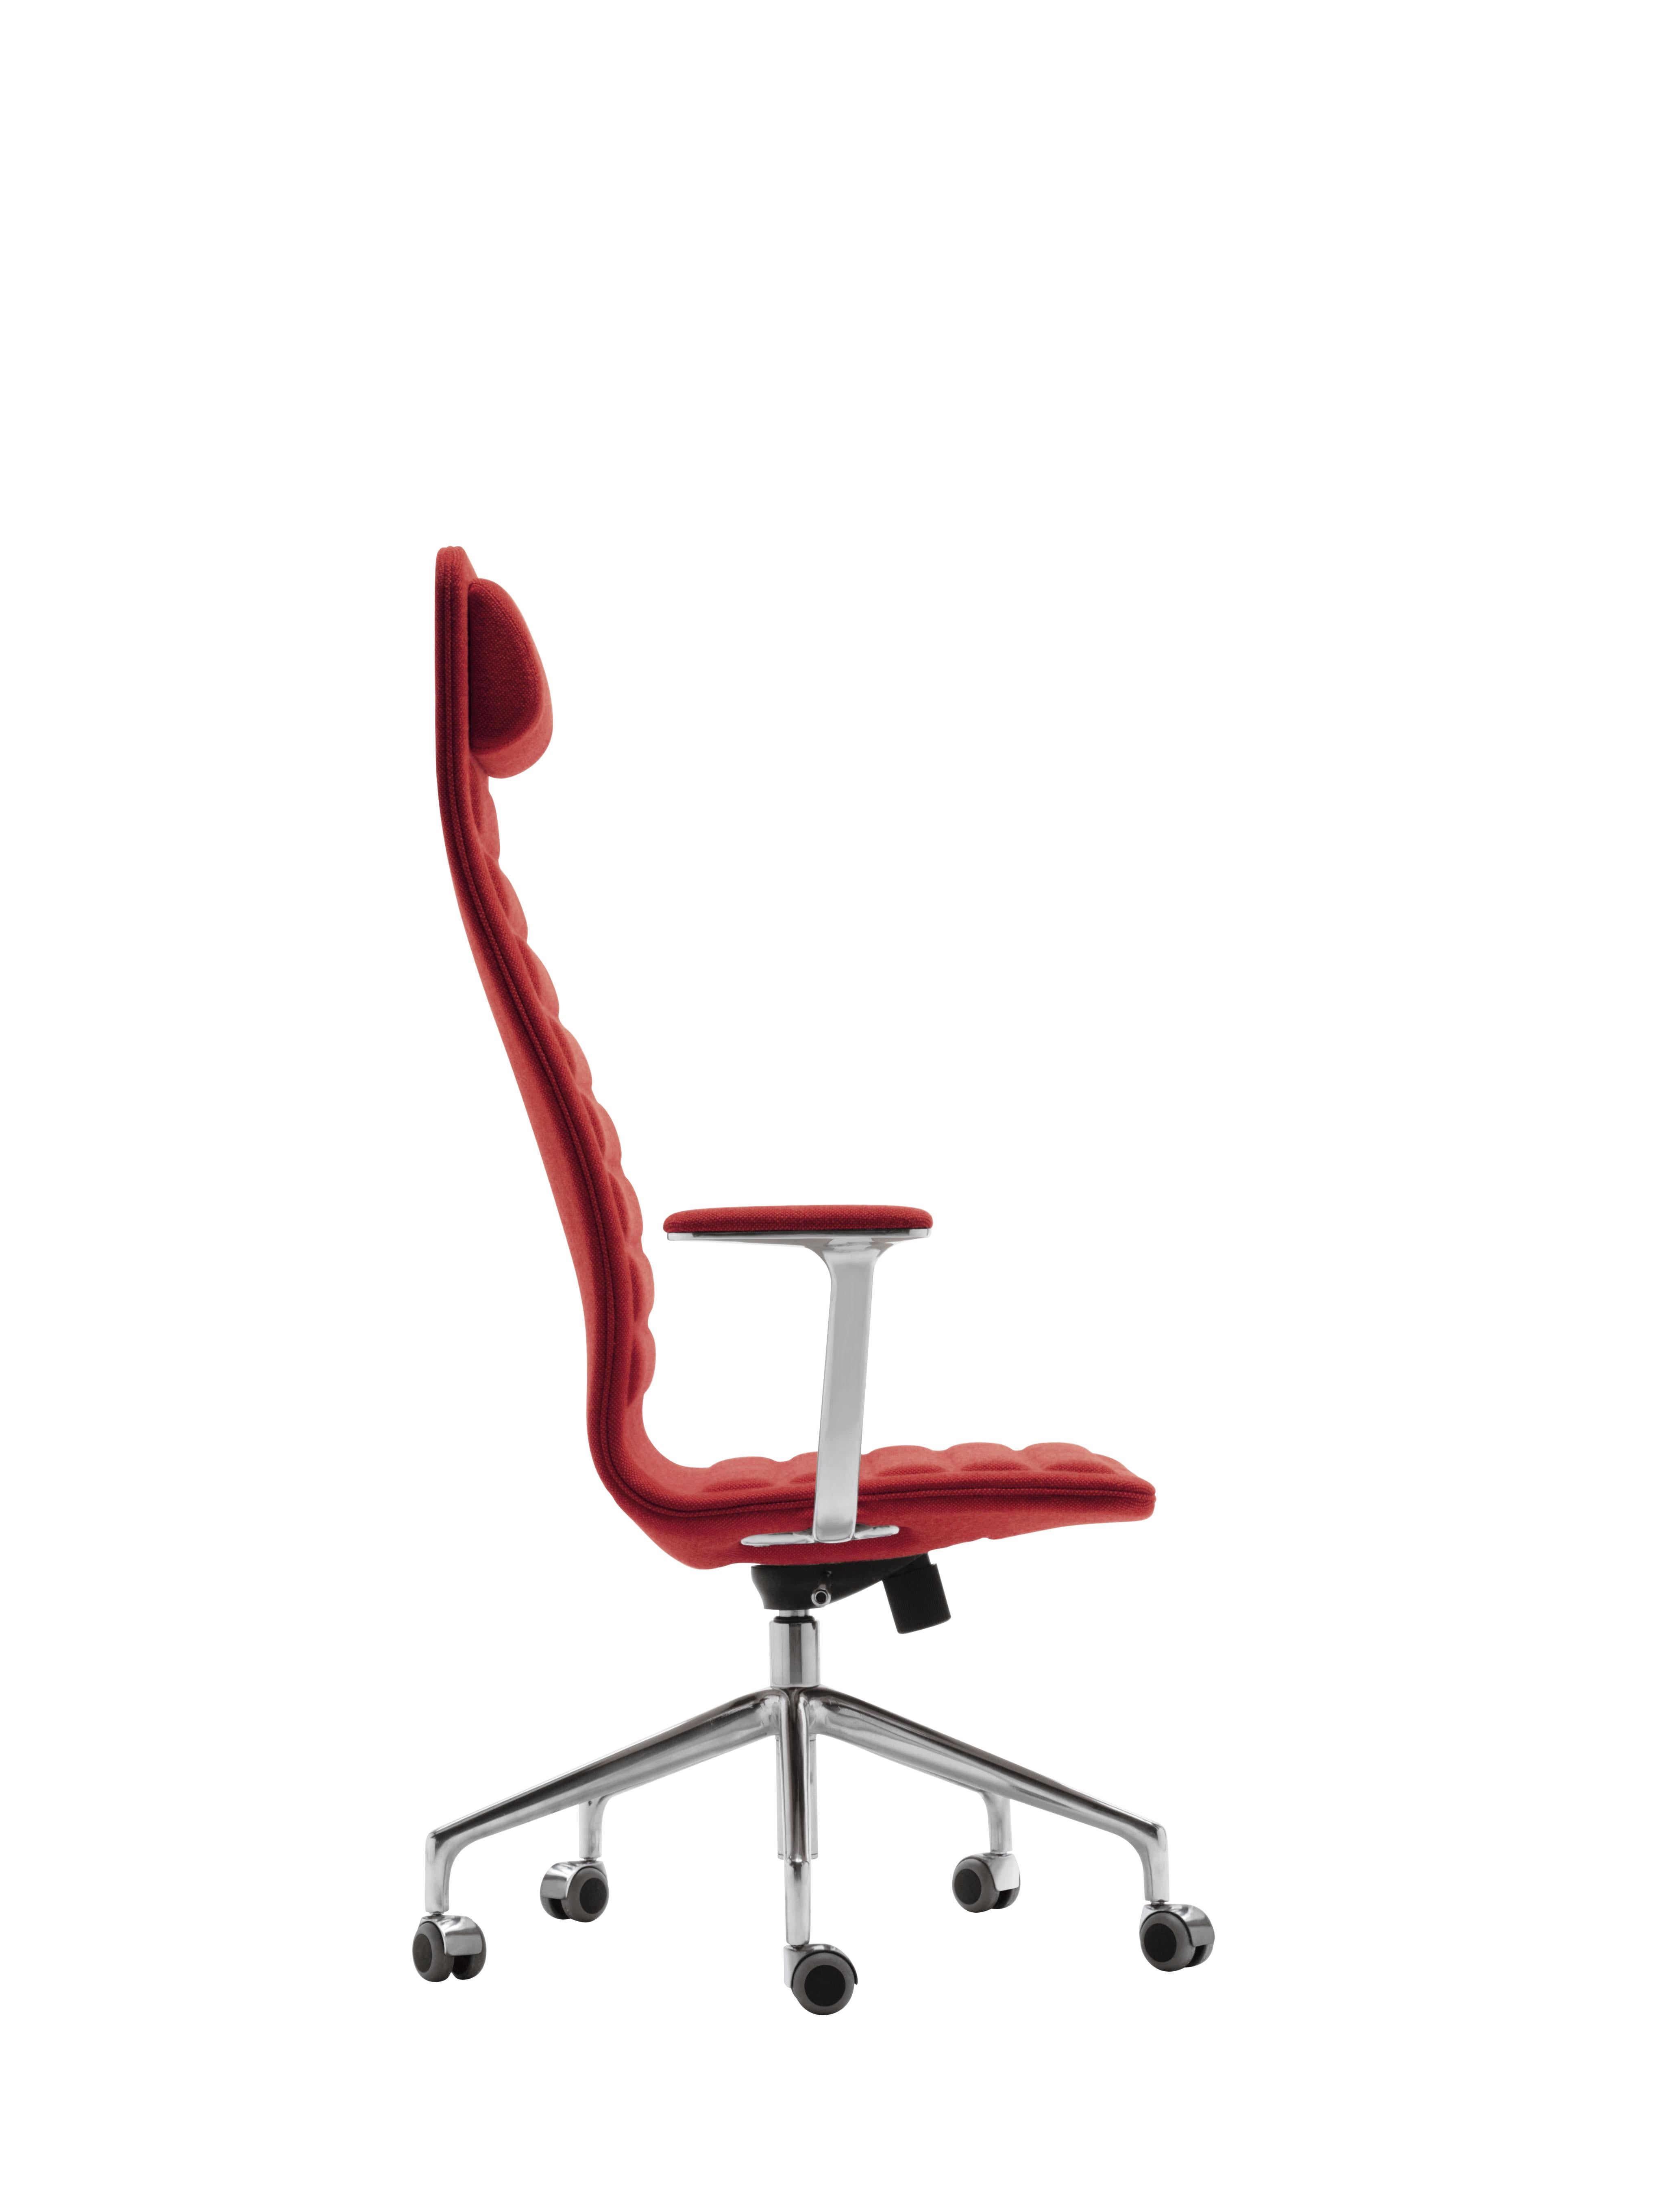 For Sale: Orange (Hallingdal 2 561) Jasper Morrison Lotus High Chair in Polished Chrome for Cappellini 3